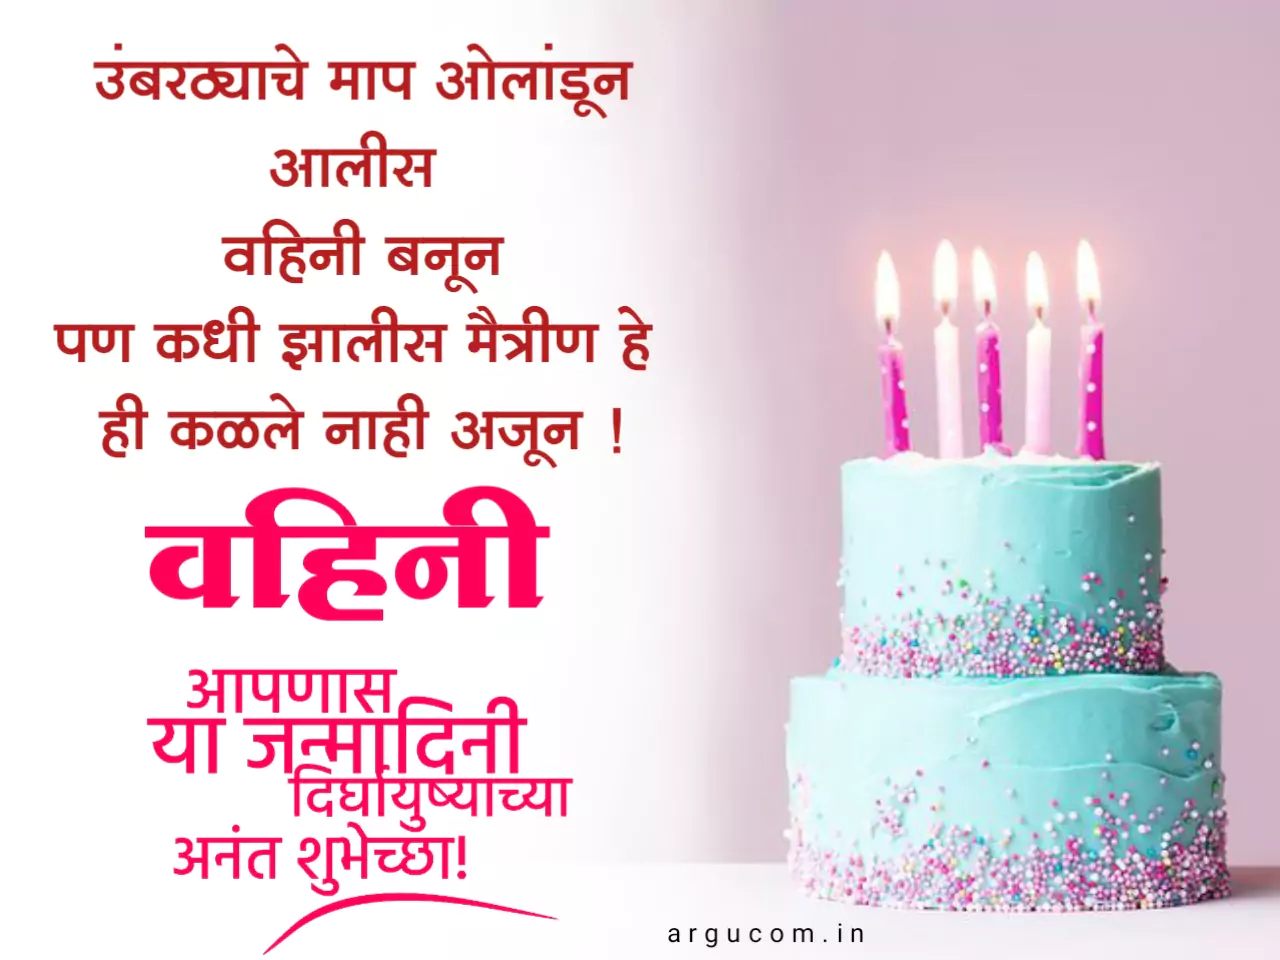 Happy Birthday Image for vahini in marathi